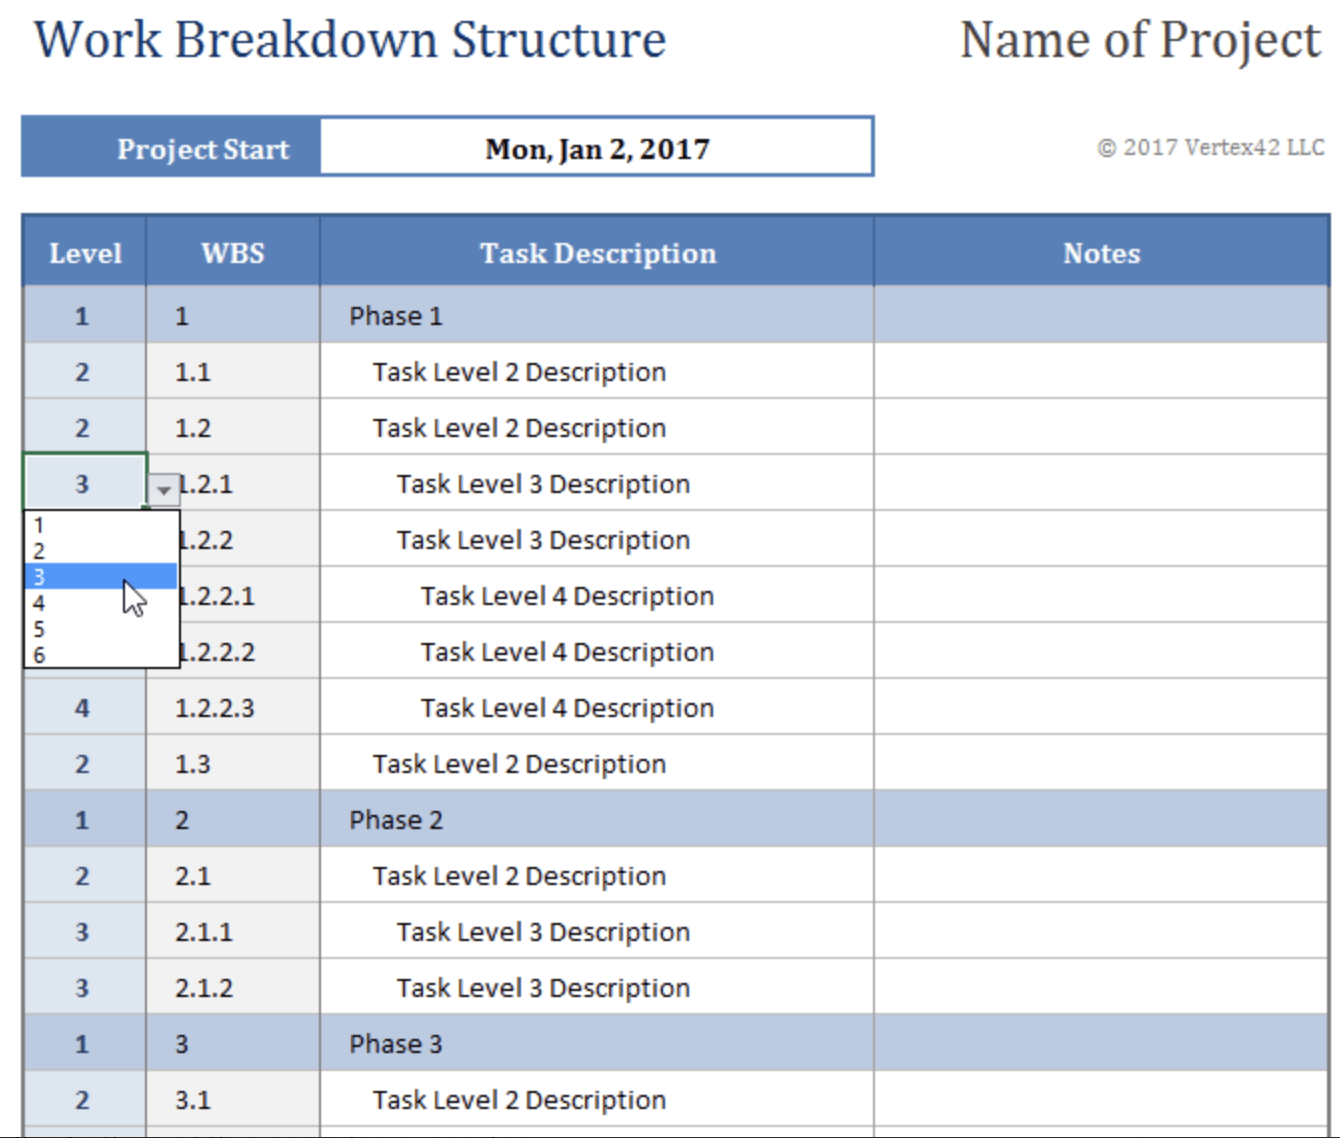 Excel Work Breakdown Structure Template by Vertex42